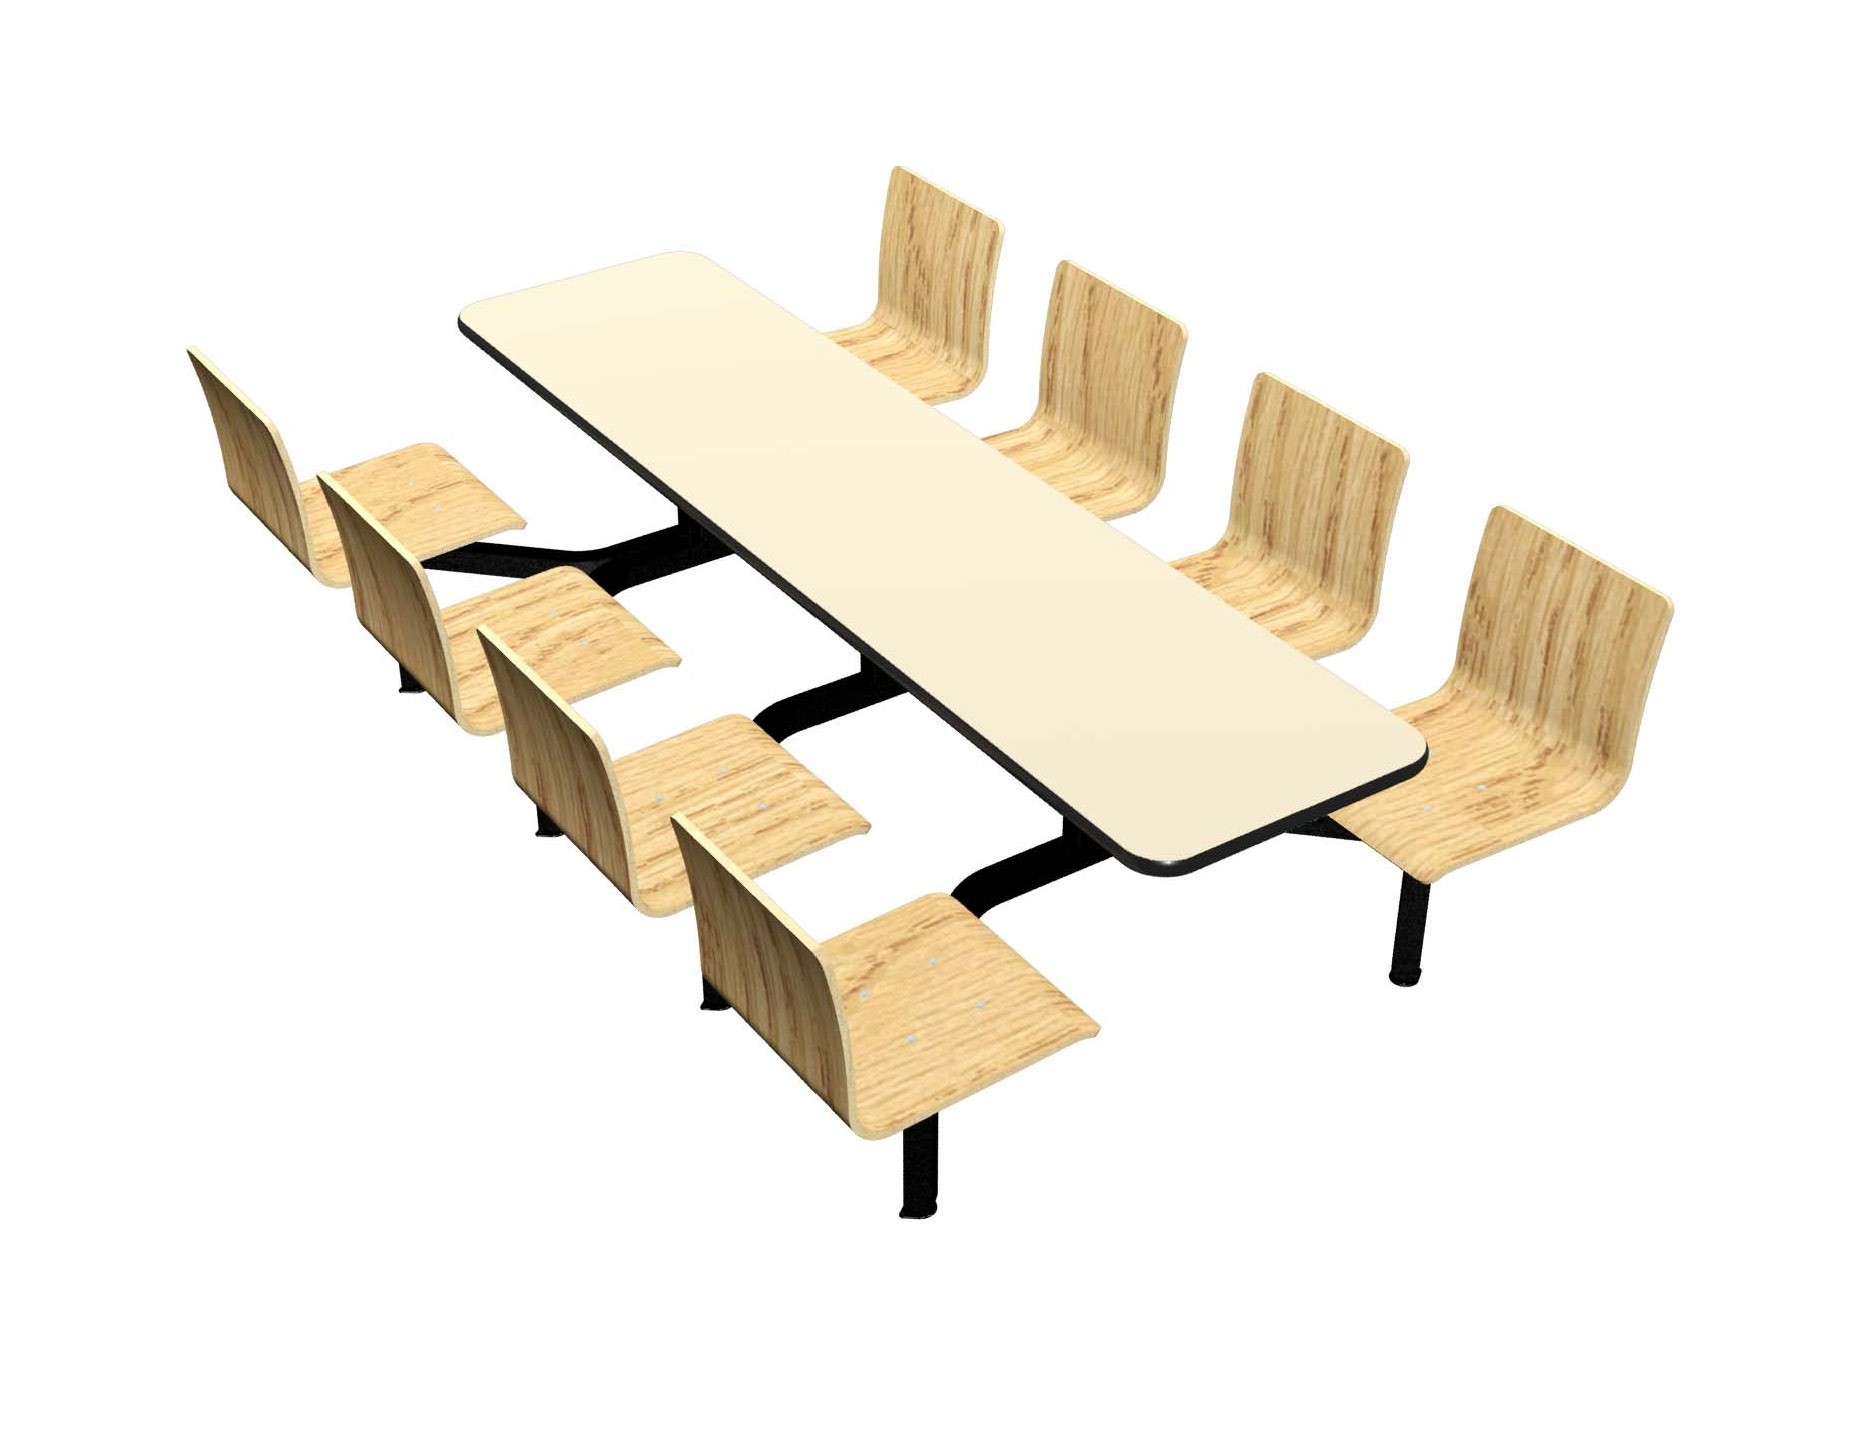 Wallaby laminate table, Black vinyl edge, Legacy chairhead in Natural Oak laminate